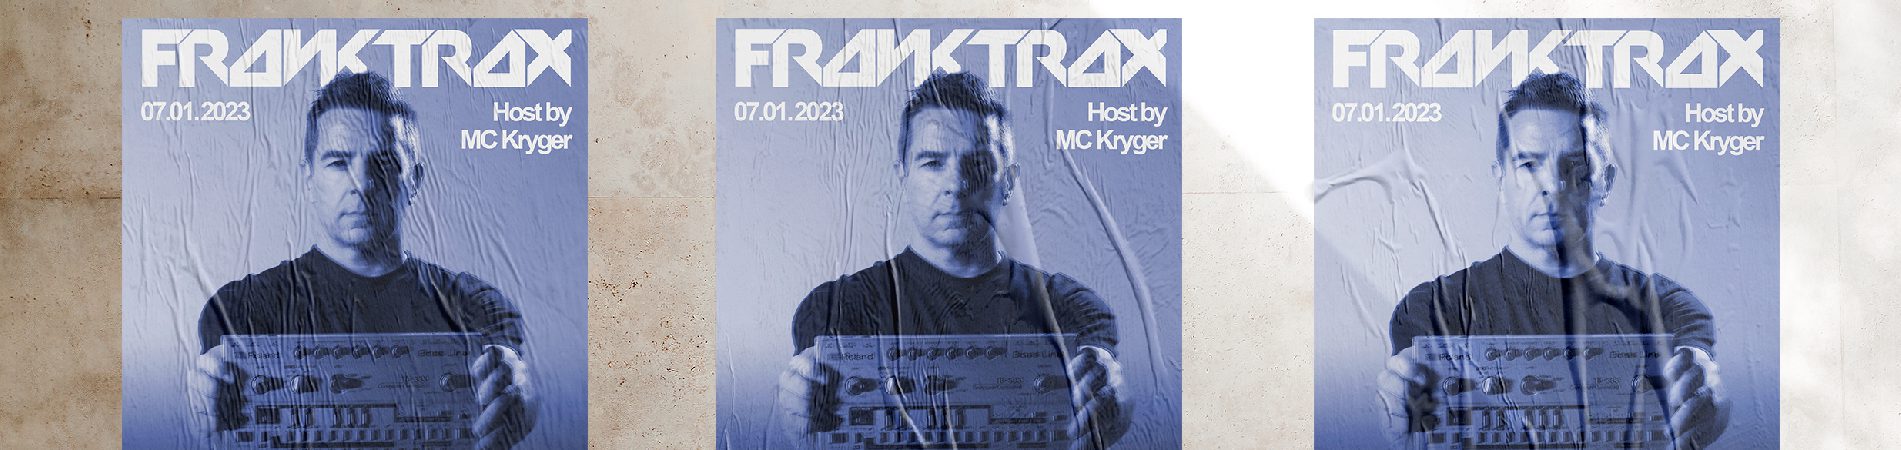 Franktrax